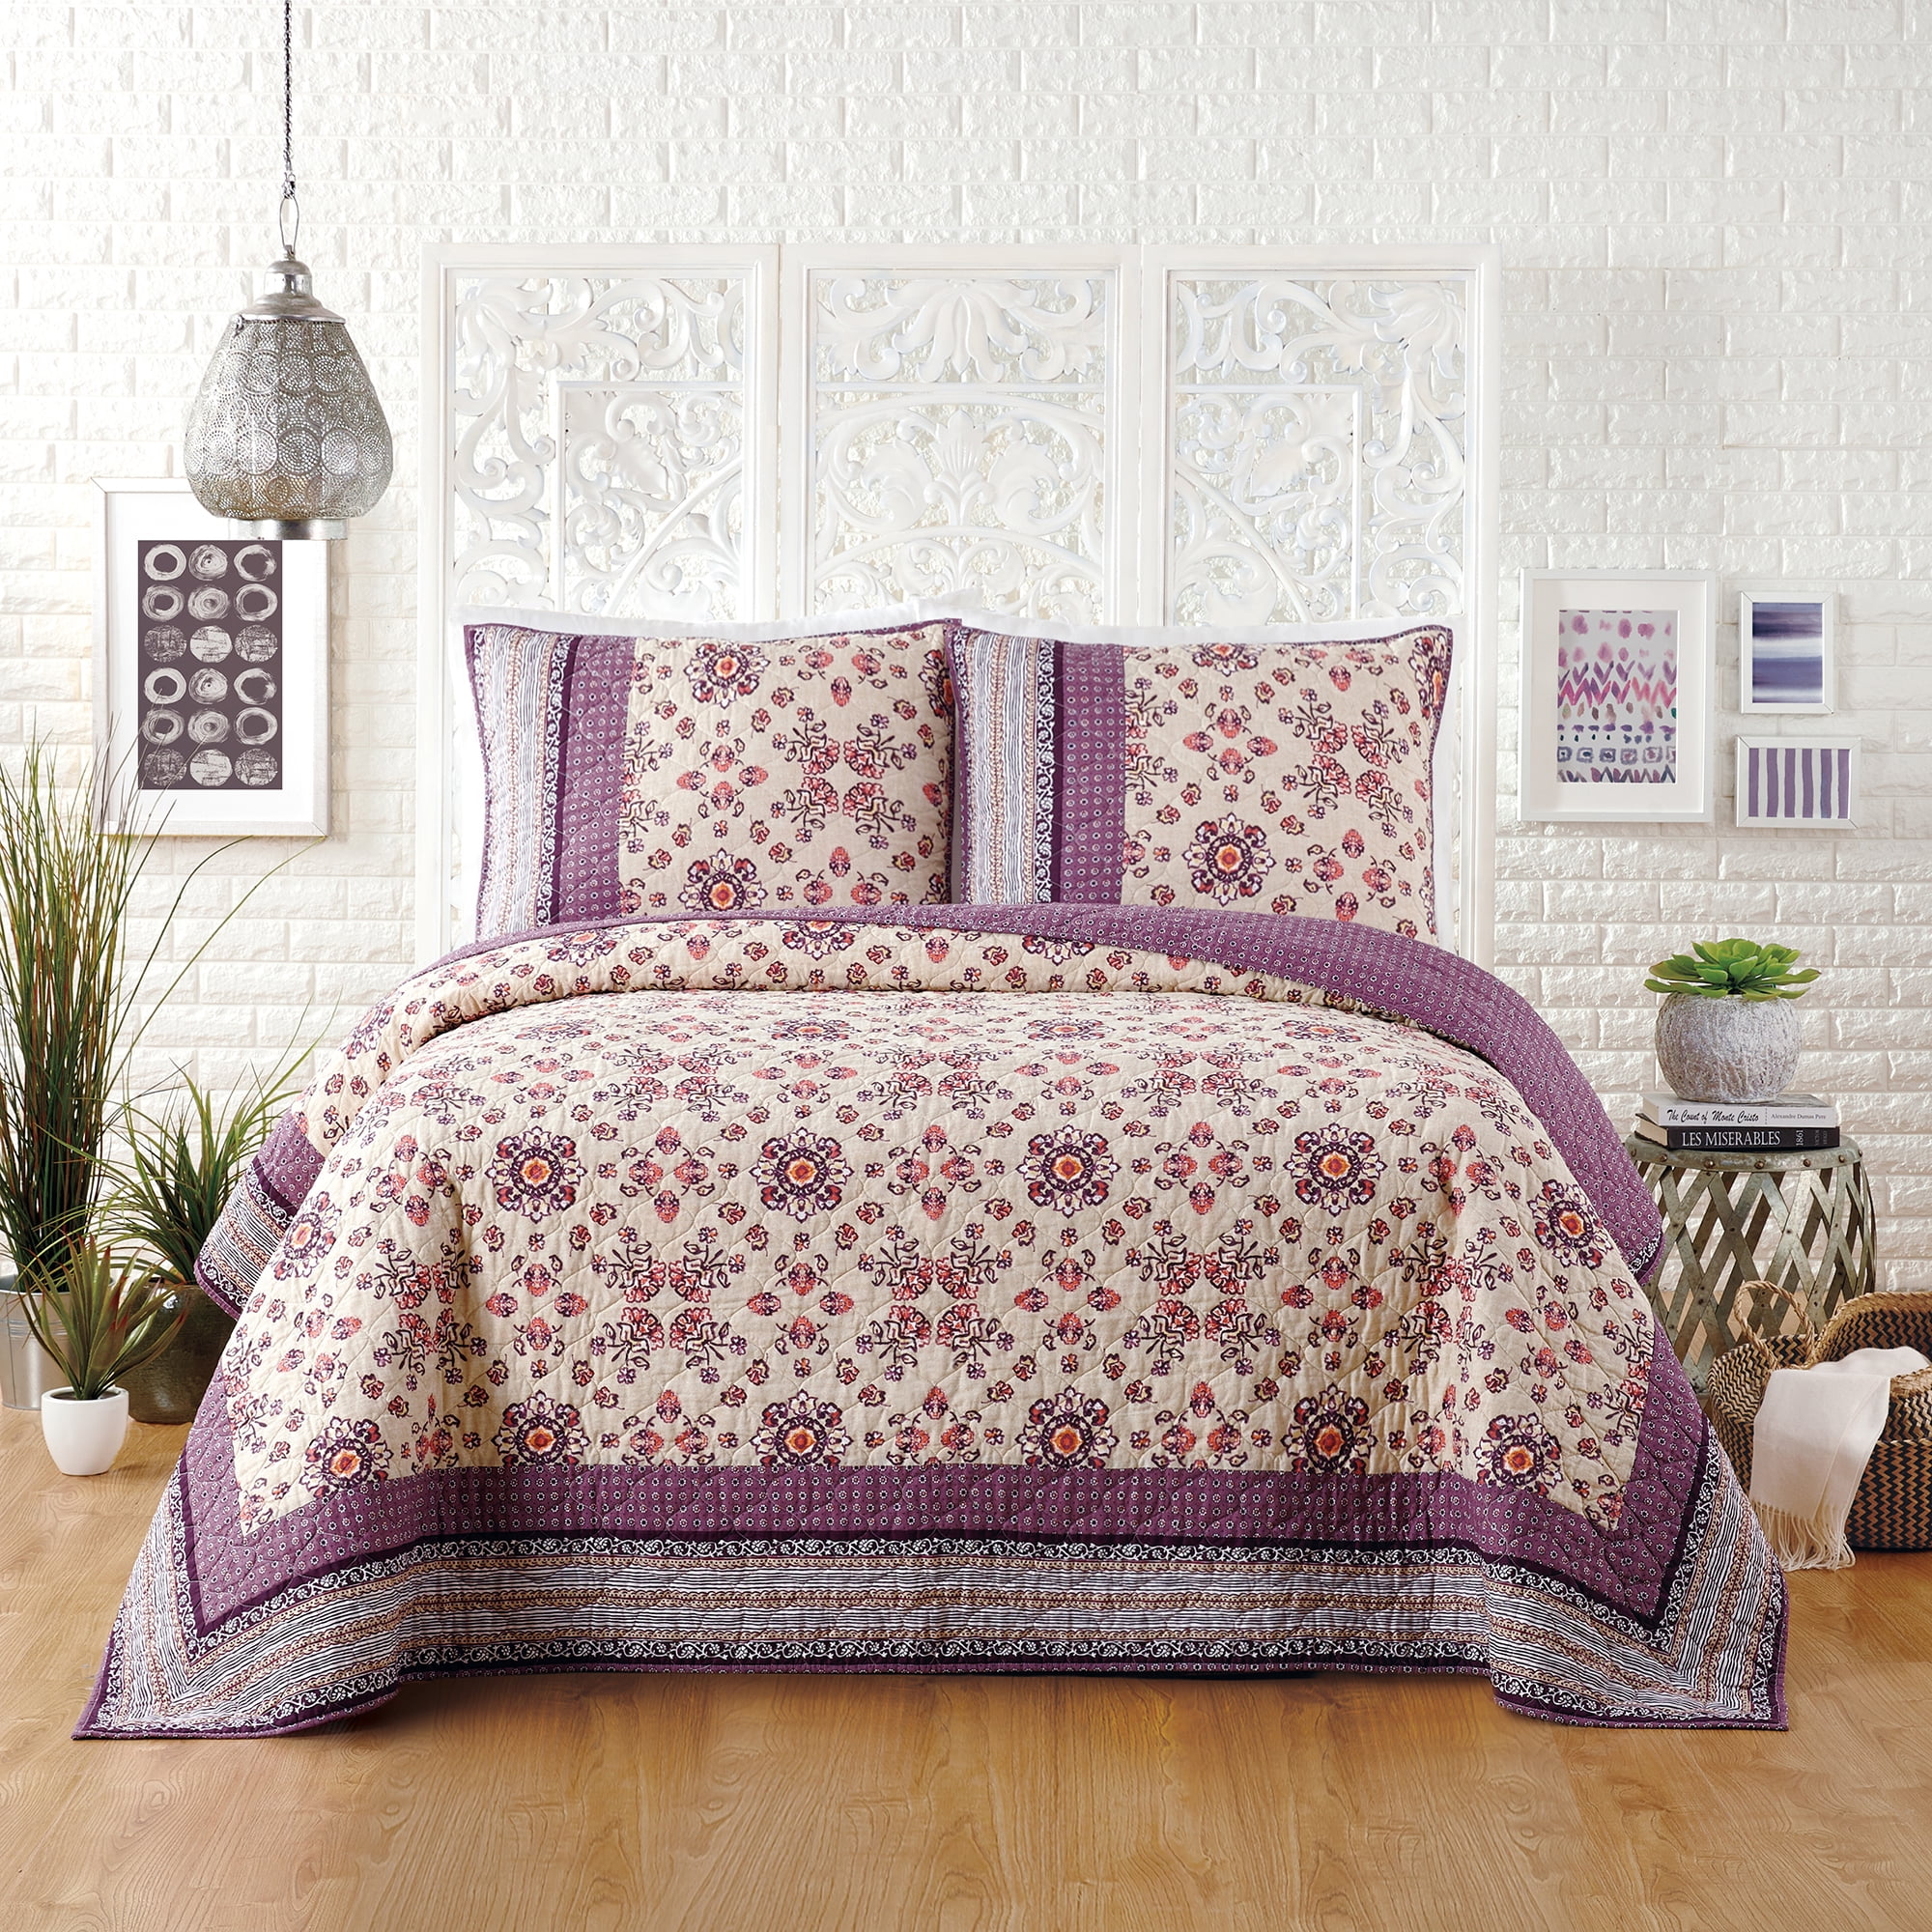 Details about    Hand Block Print Kantha Quilt Handmade Cotton Bedspread Queen Size Crazy Multi 